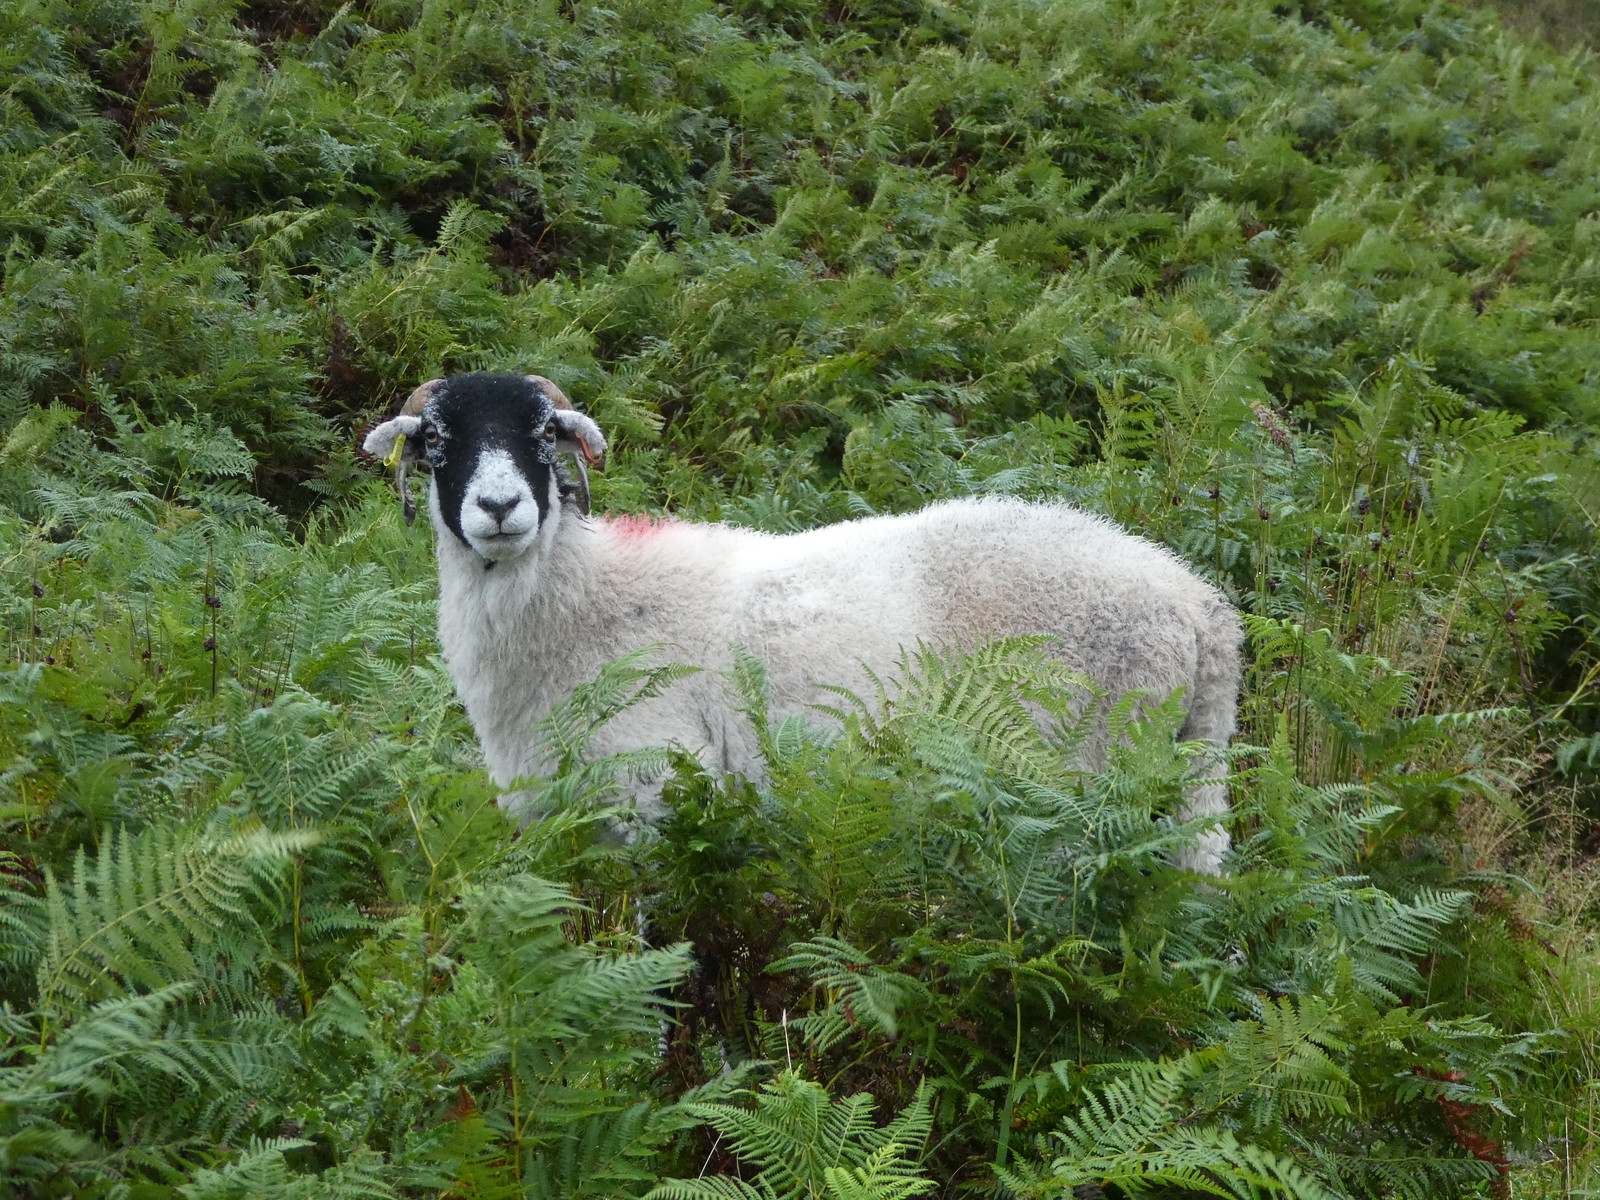 Sheep, Trough of Bowland